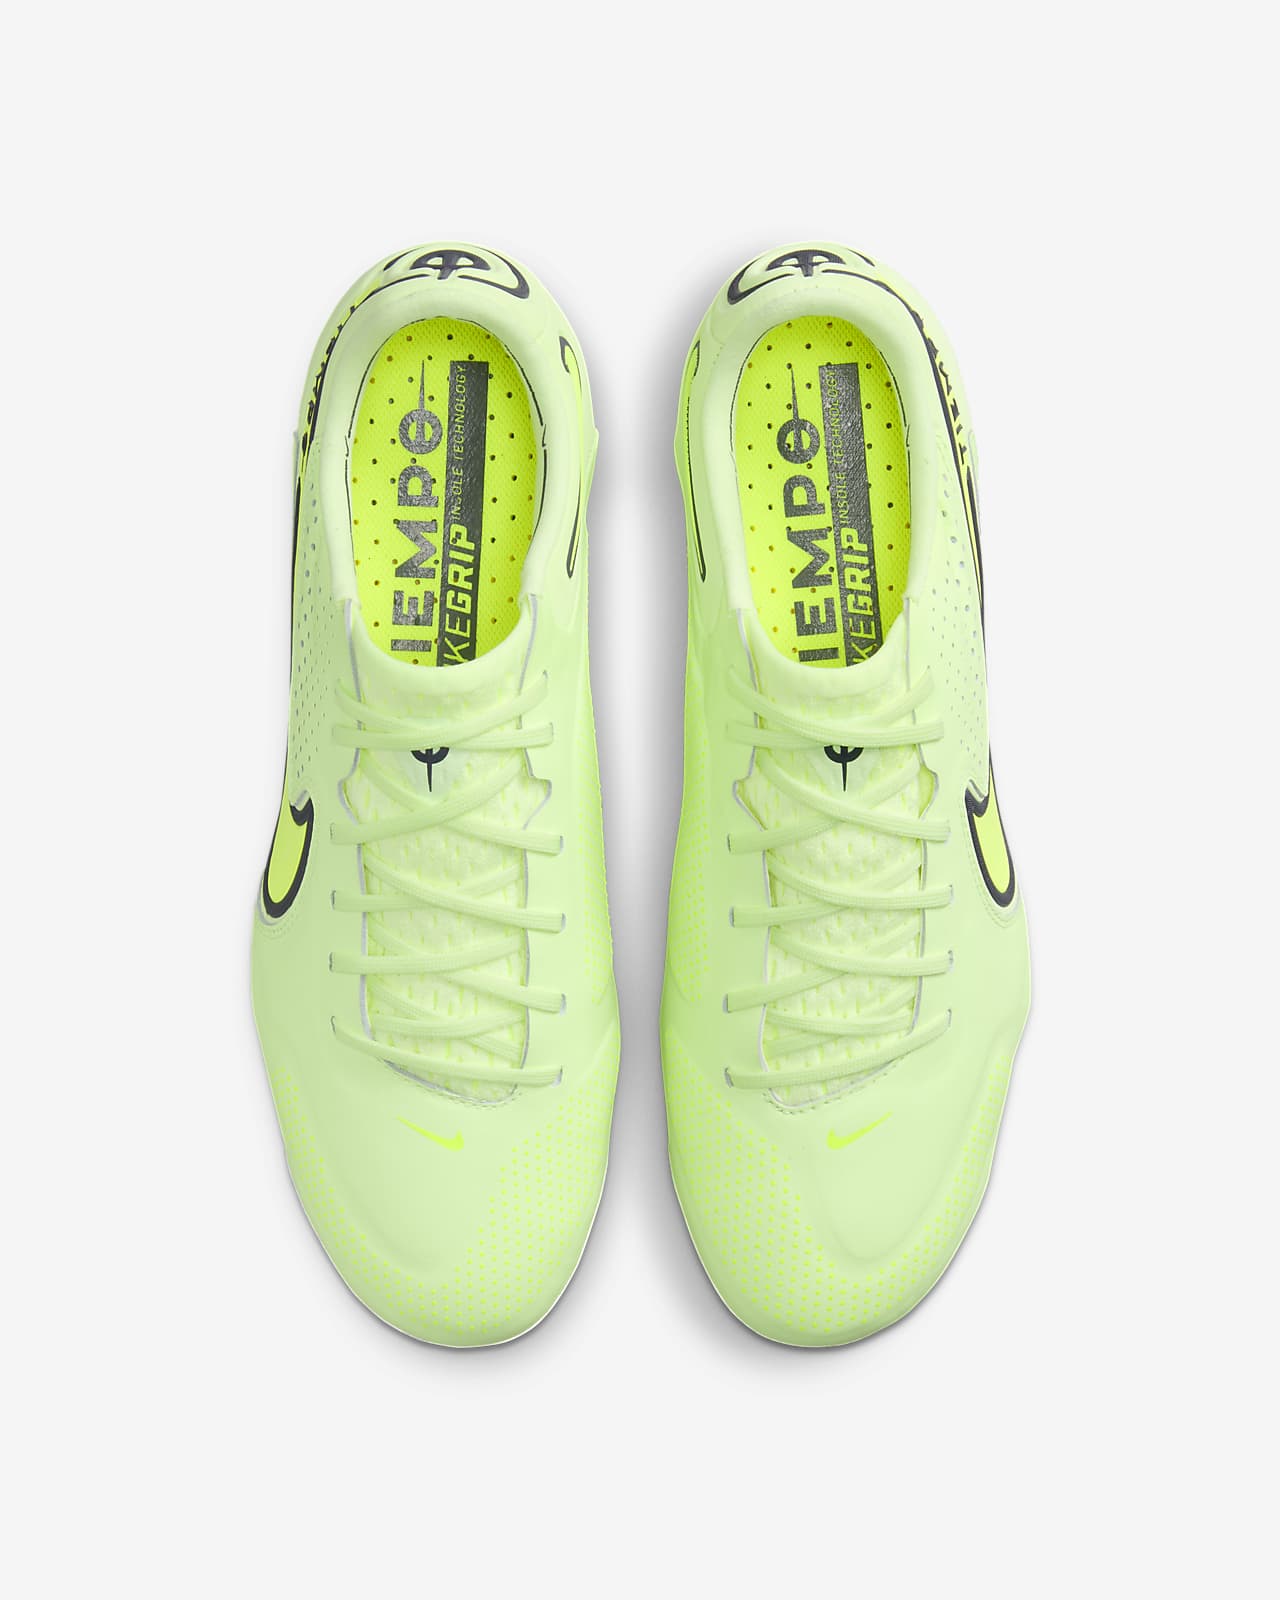 Nike Mercurial Vapor 13 Elite FG Firm-Ground Soccer Cleat.